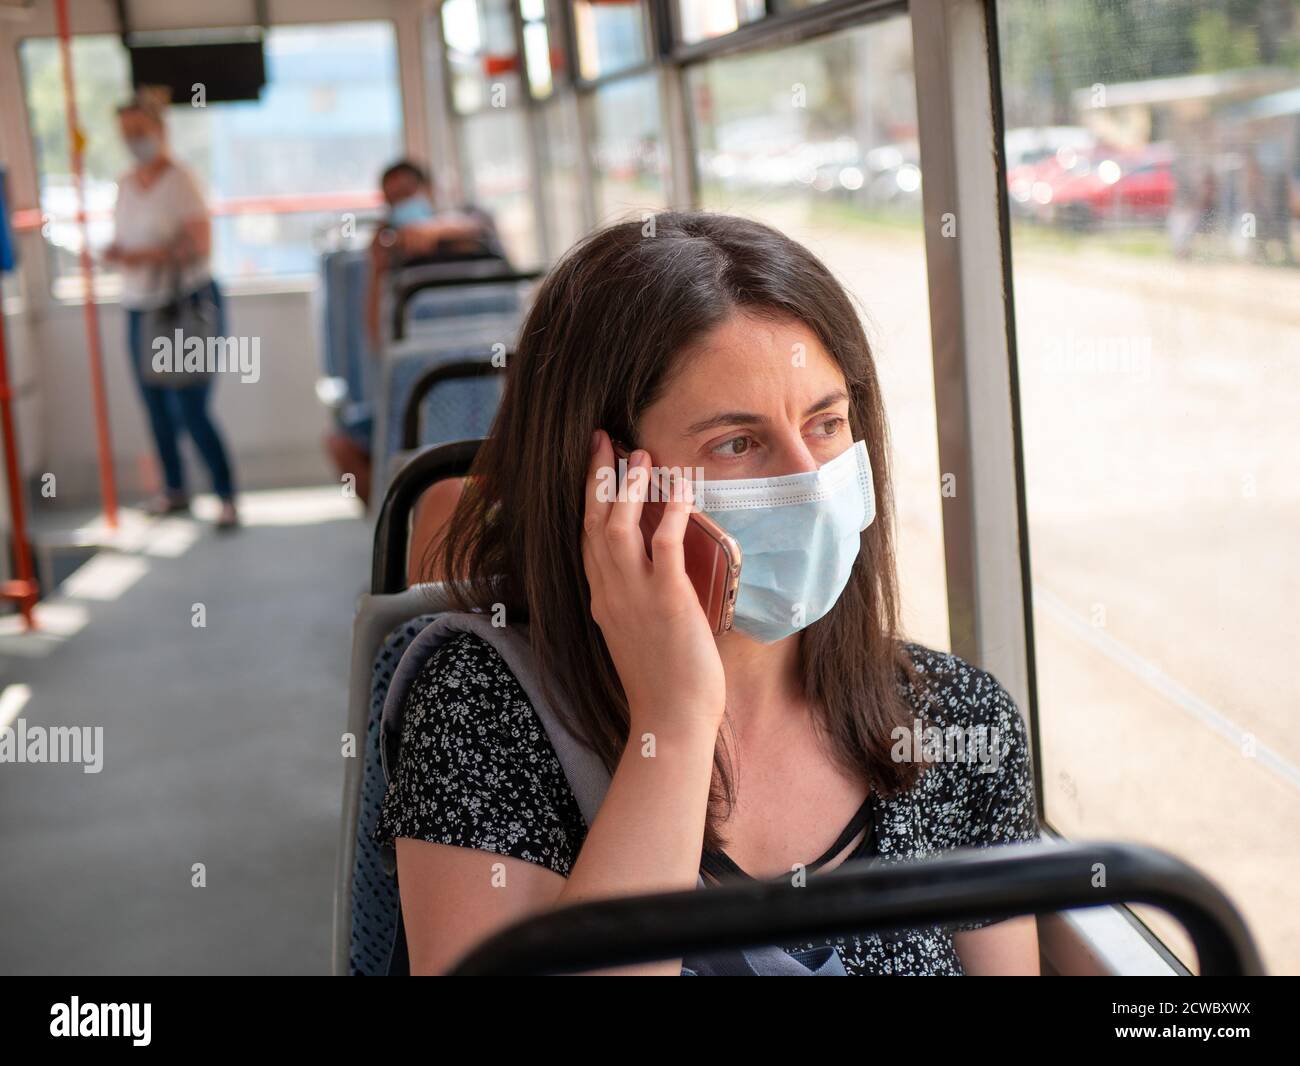 woman using public transport wearing face mask on bus during Covid 19 coronavirus pandemic, Sofia, Bulgaria Stock Photo